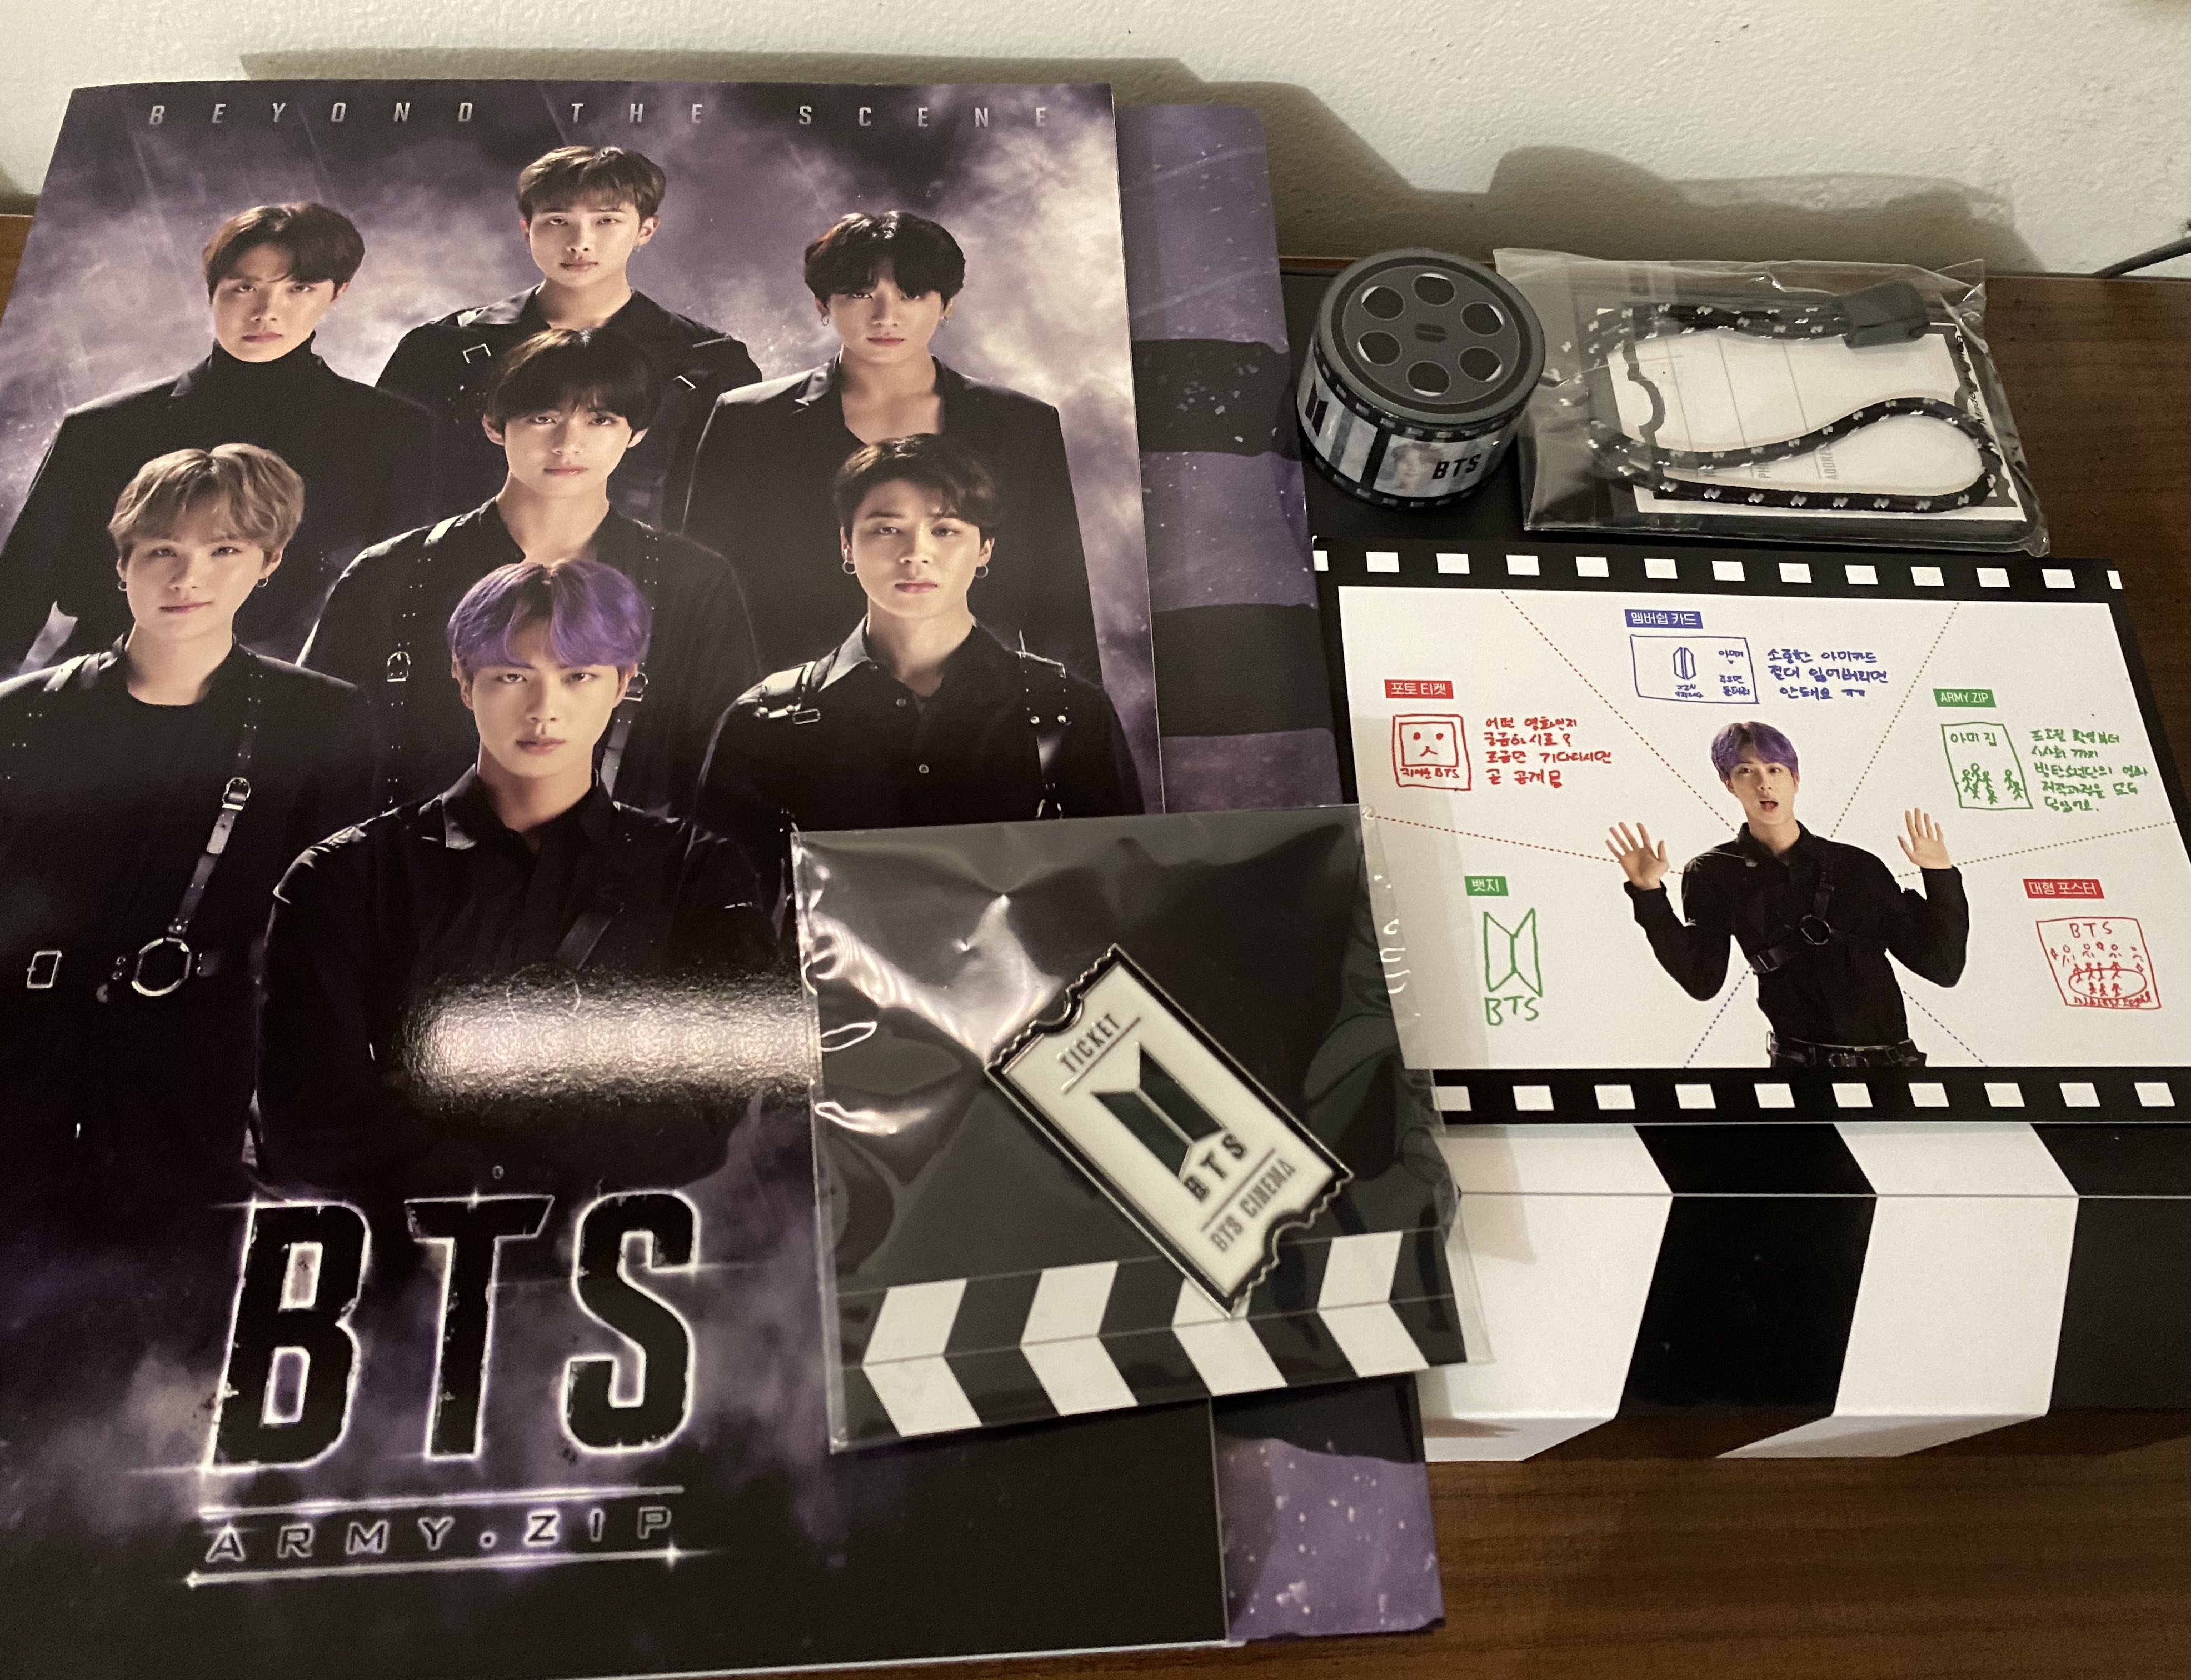 price check] BTS Love Myself unicef bracelet & BTS Army.zip (6th army  membership kit) : r/kpopforsale